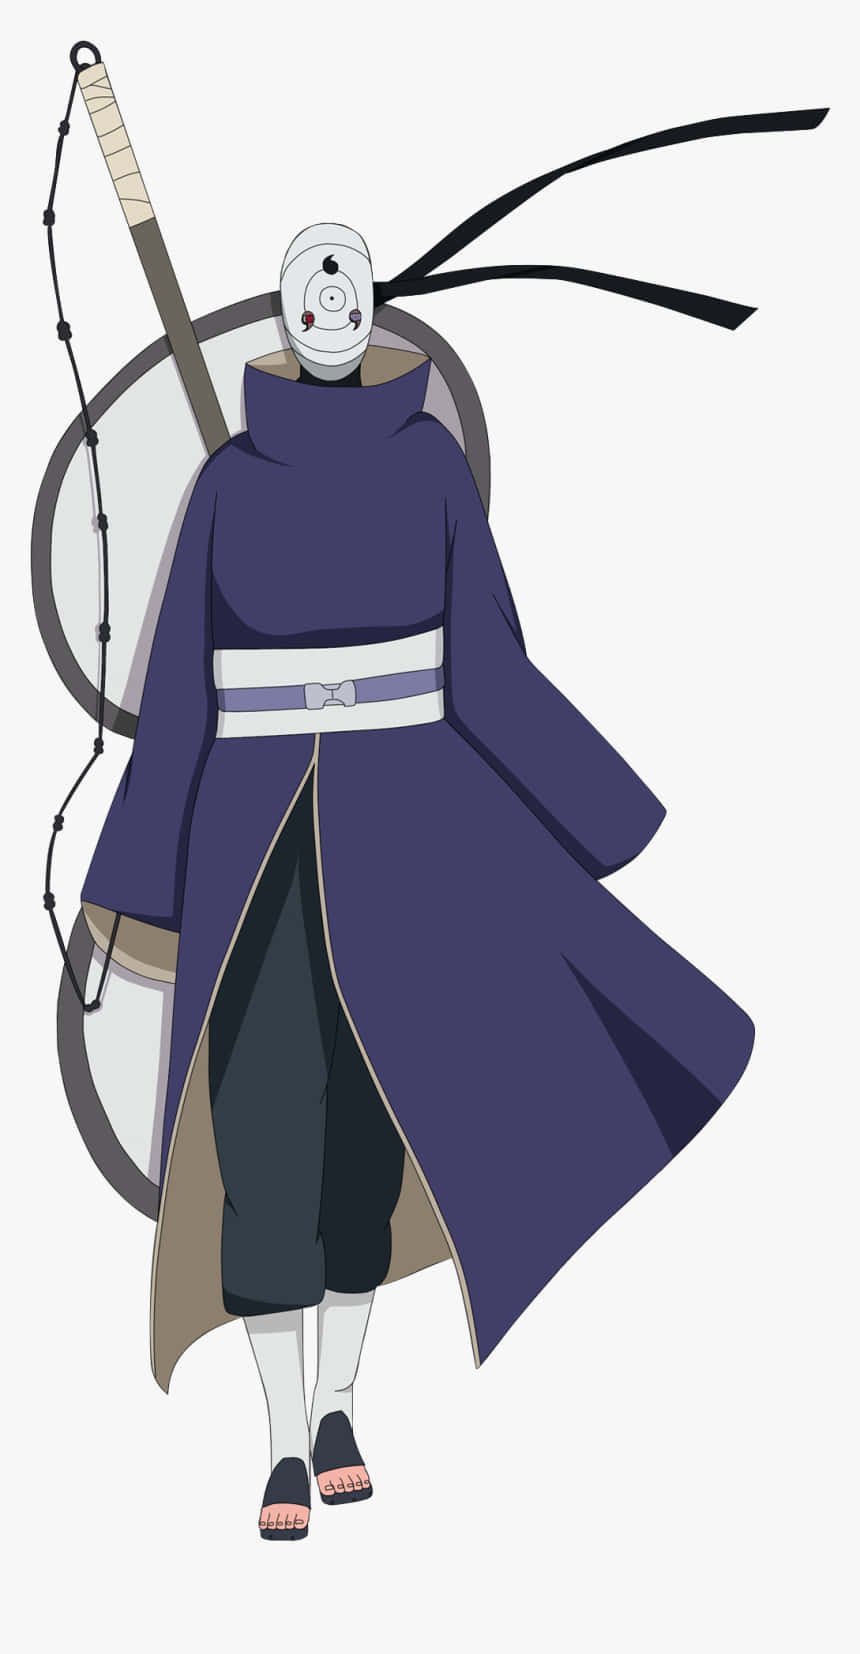 Madara Uchiha, leder af Akatsuki, som ses i Naruto anime-serien. Wallpaper